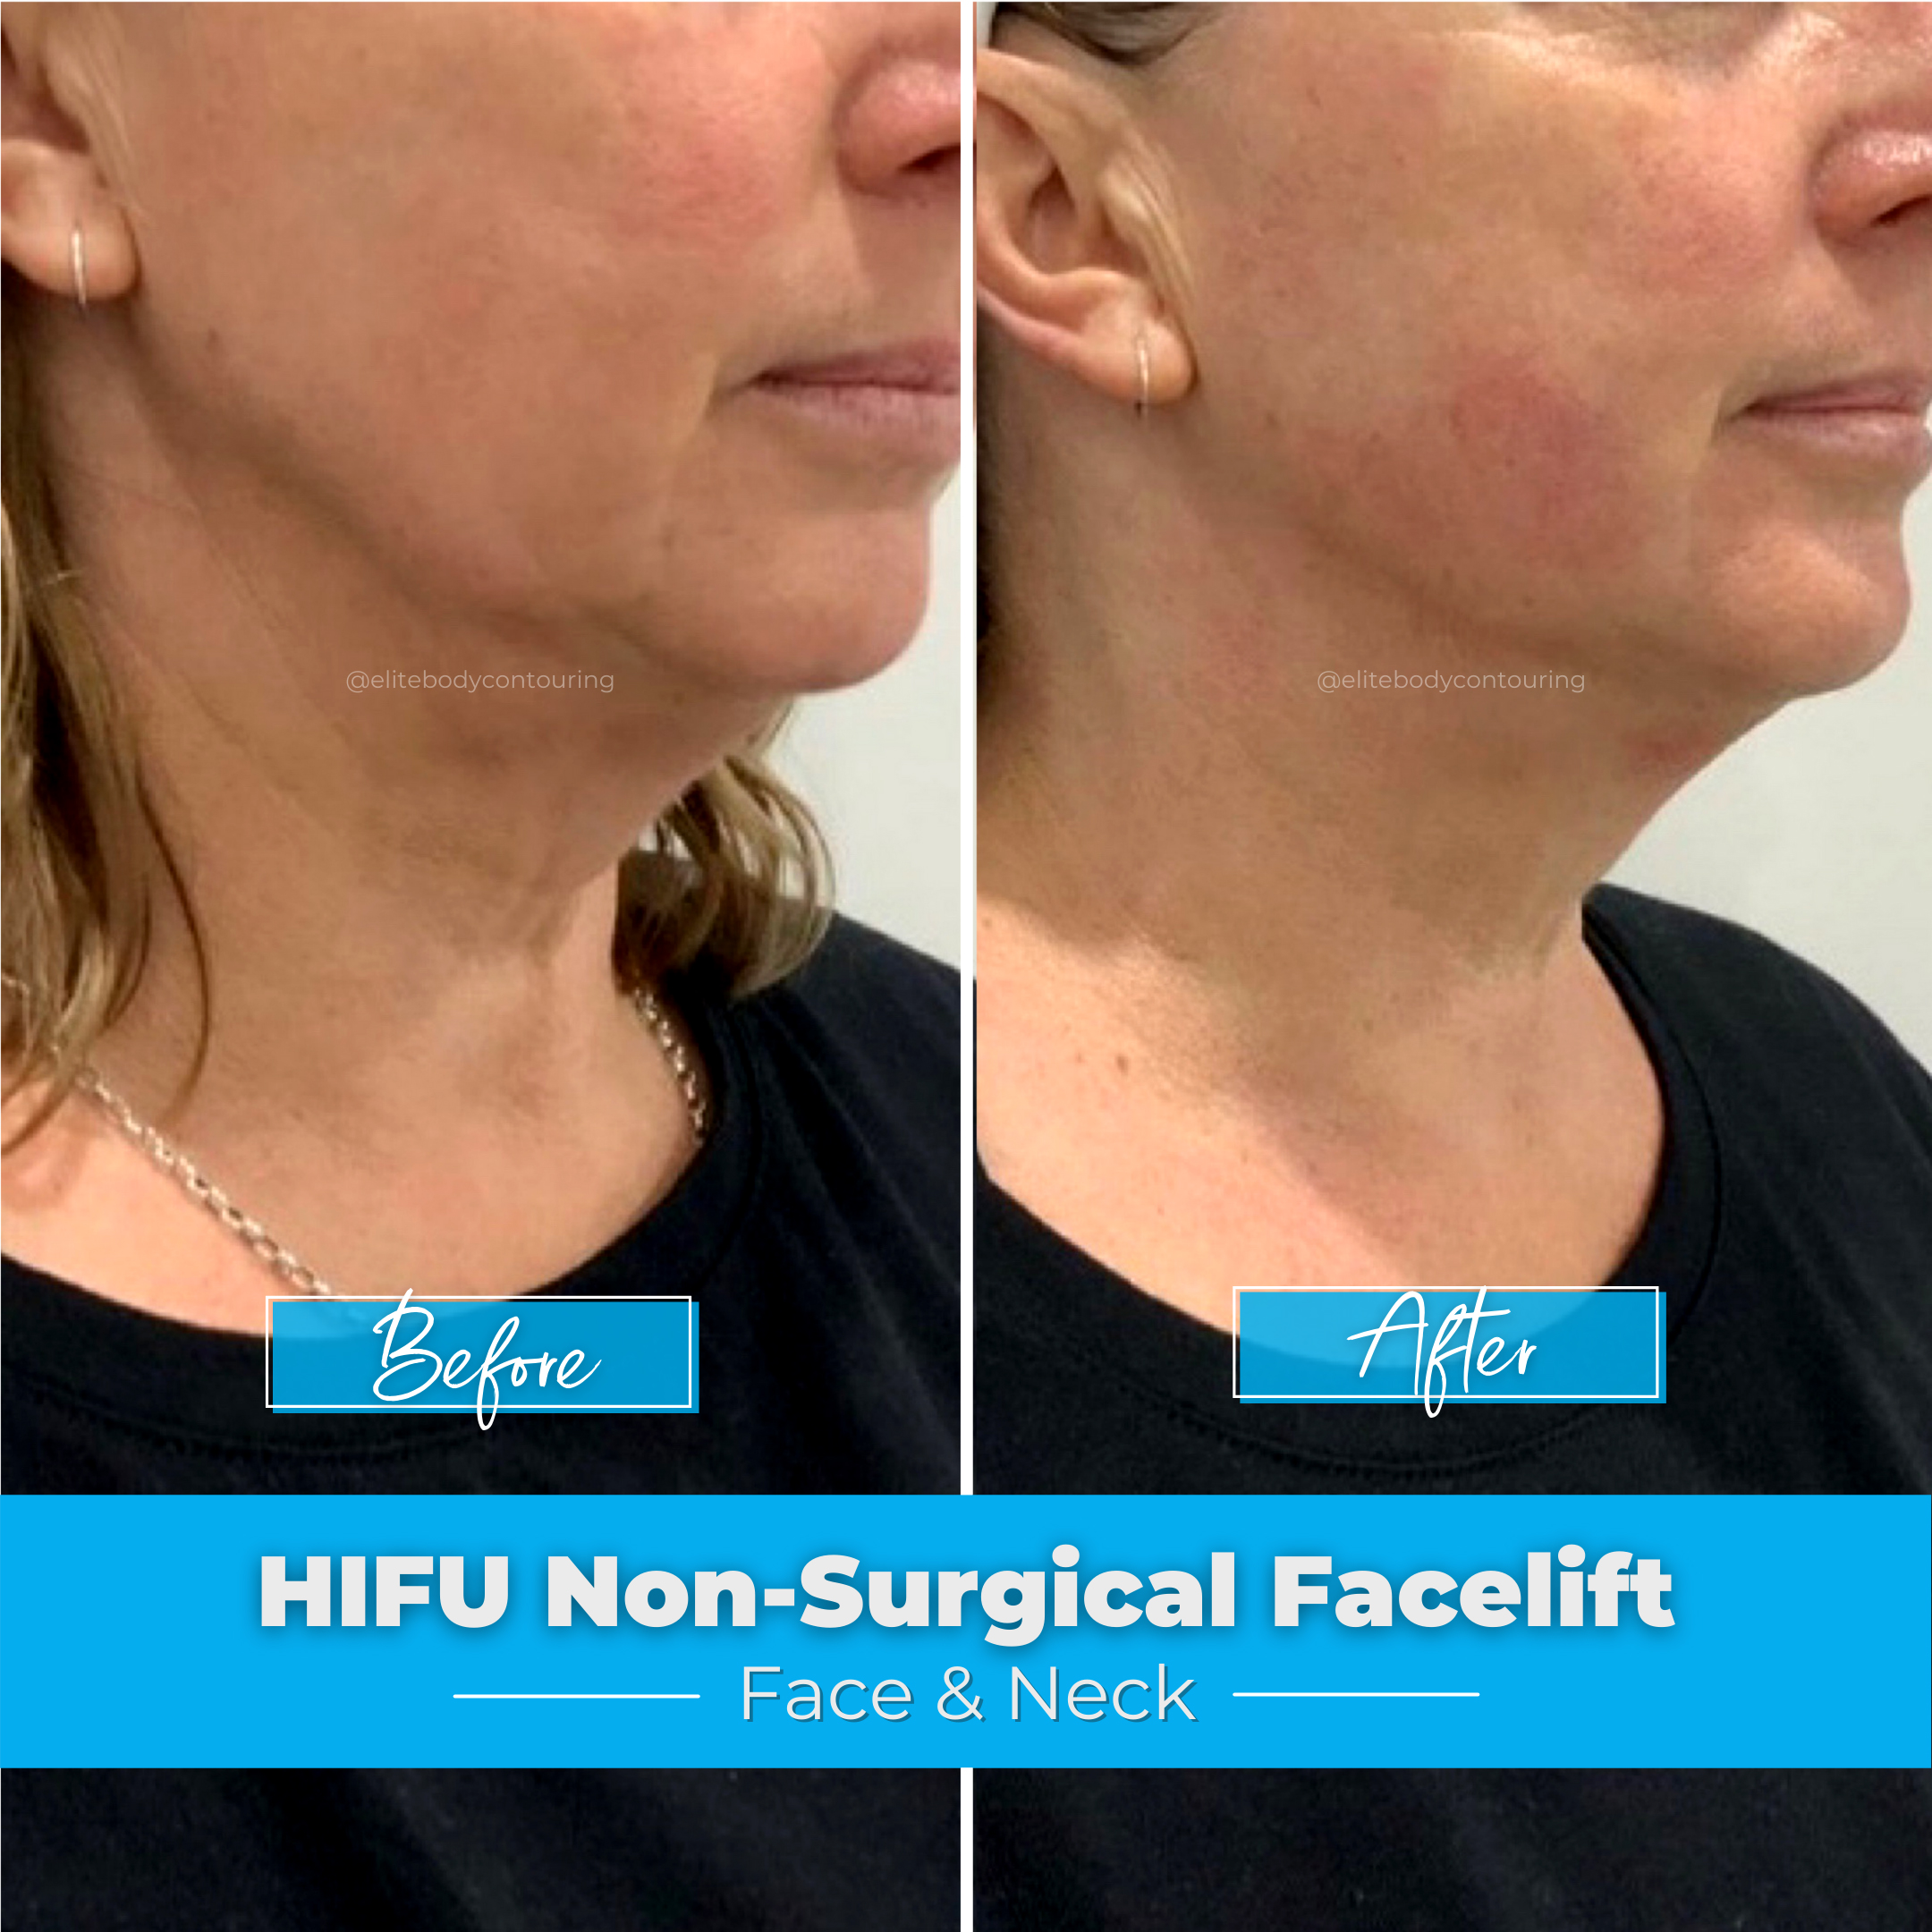 HIFU Non-Surgical Facelift